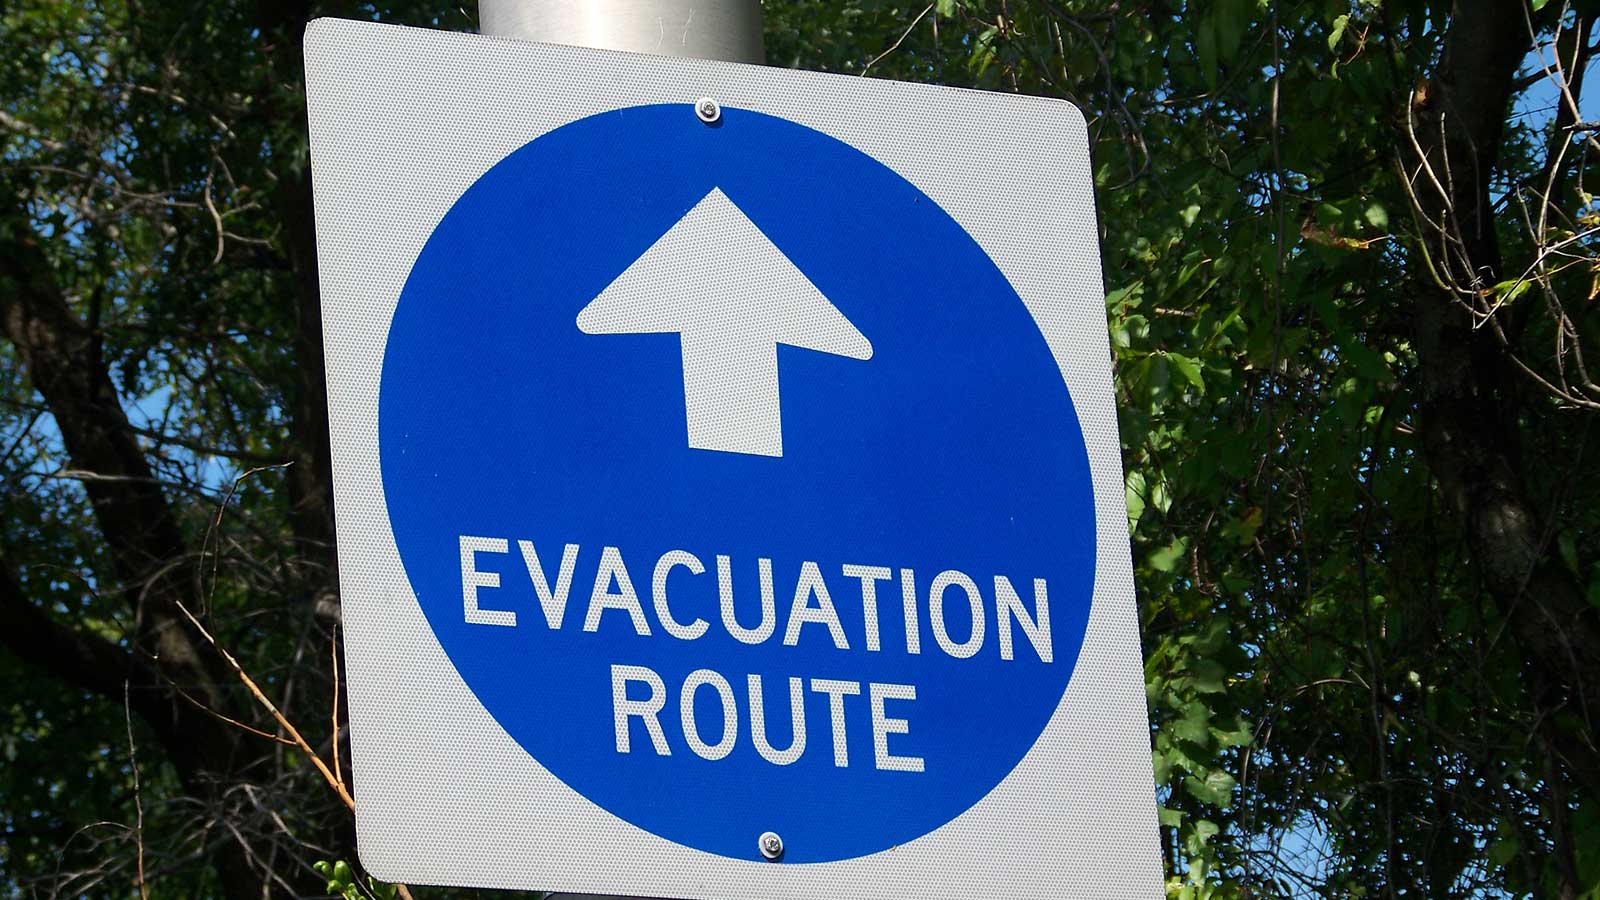 evacuation sign